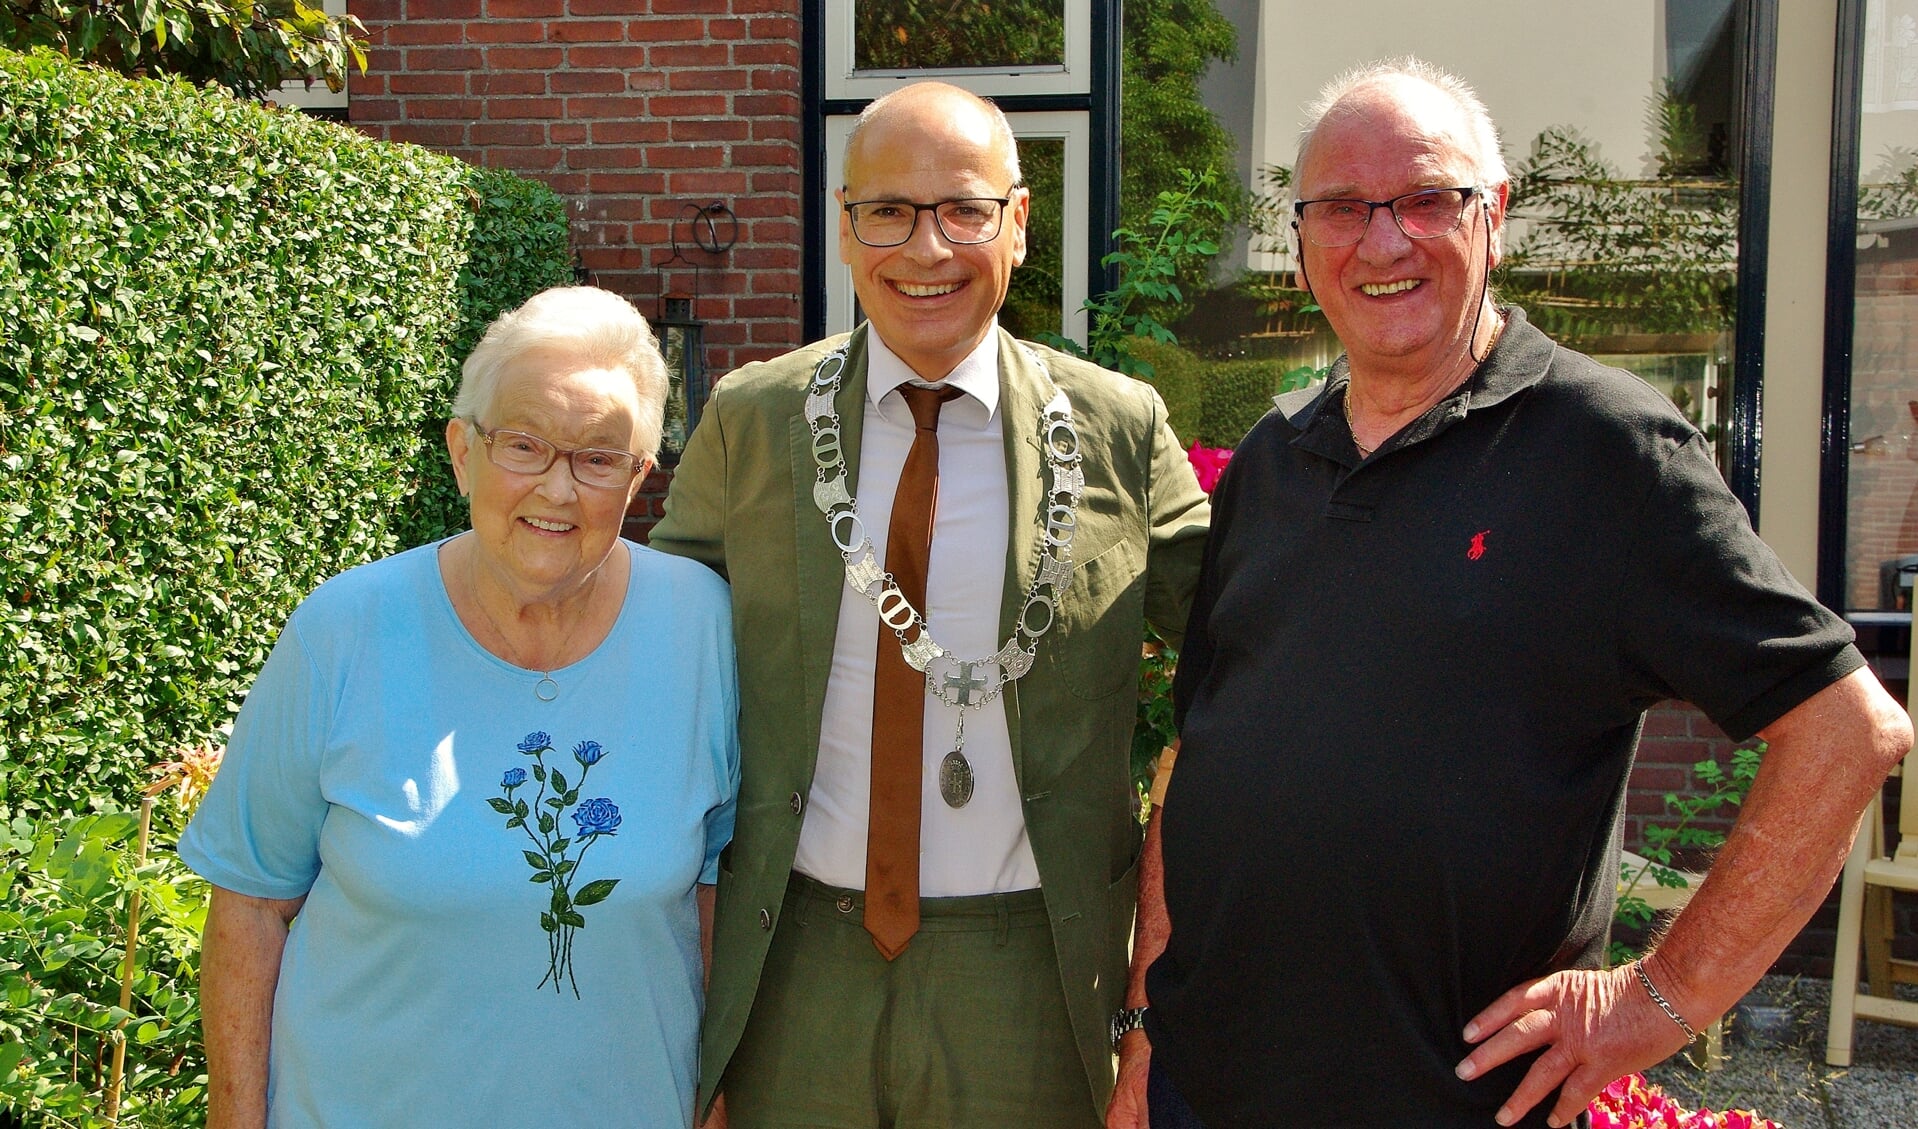 Op maandag 29 juli was burgemeester Emile Jaensch te gast bij bruidspaar Oudshoorn.